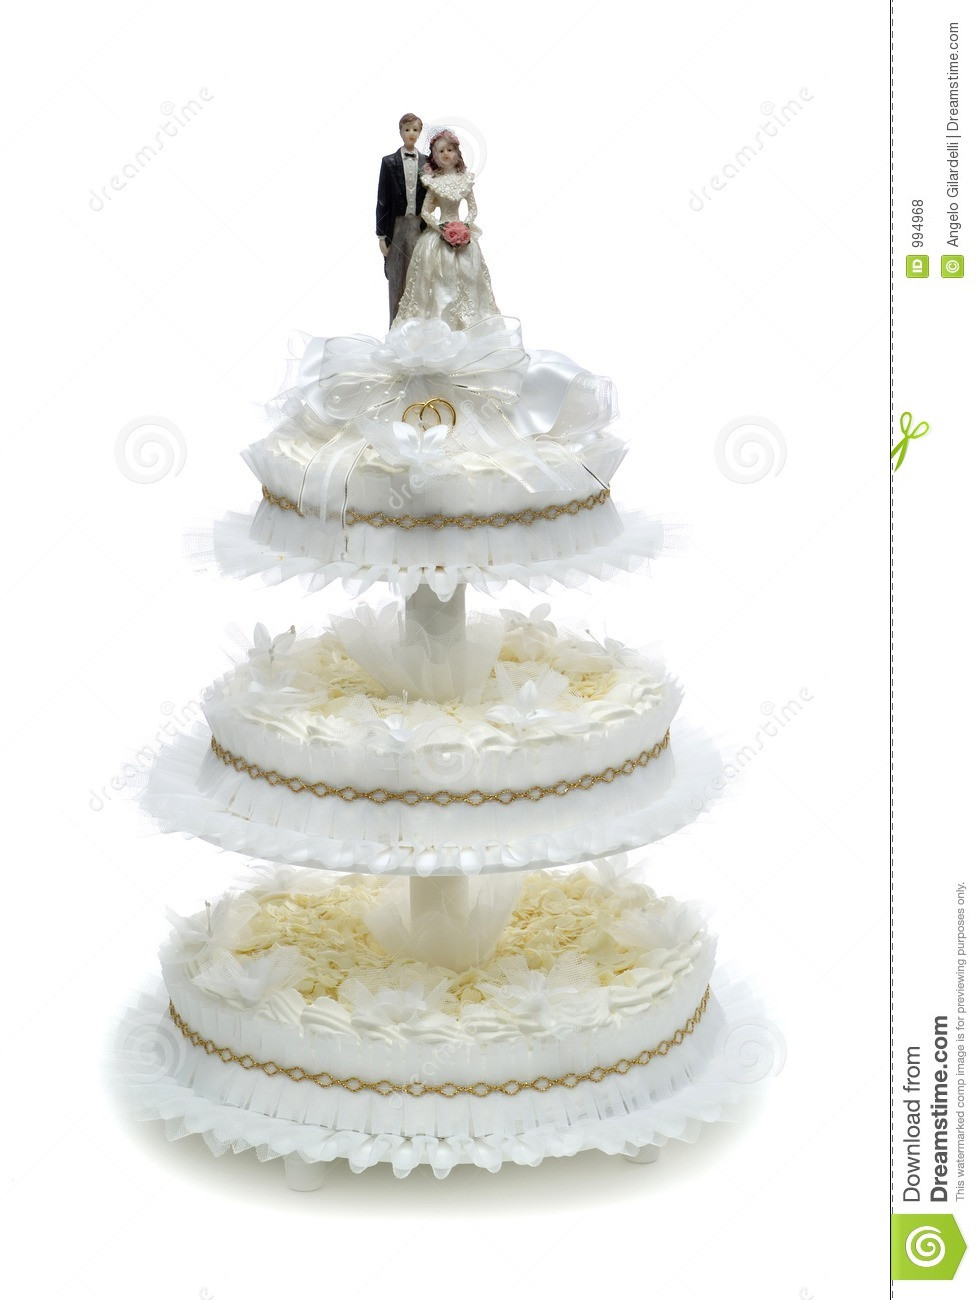 Royalty Wedding Cakes
 8 Free Stock s Wedding Cakes Red Wedding